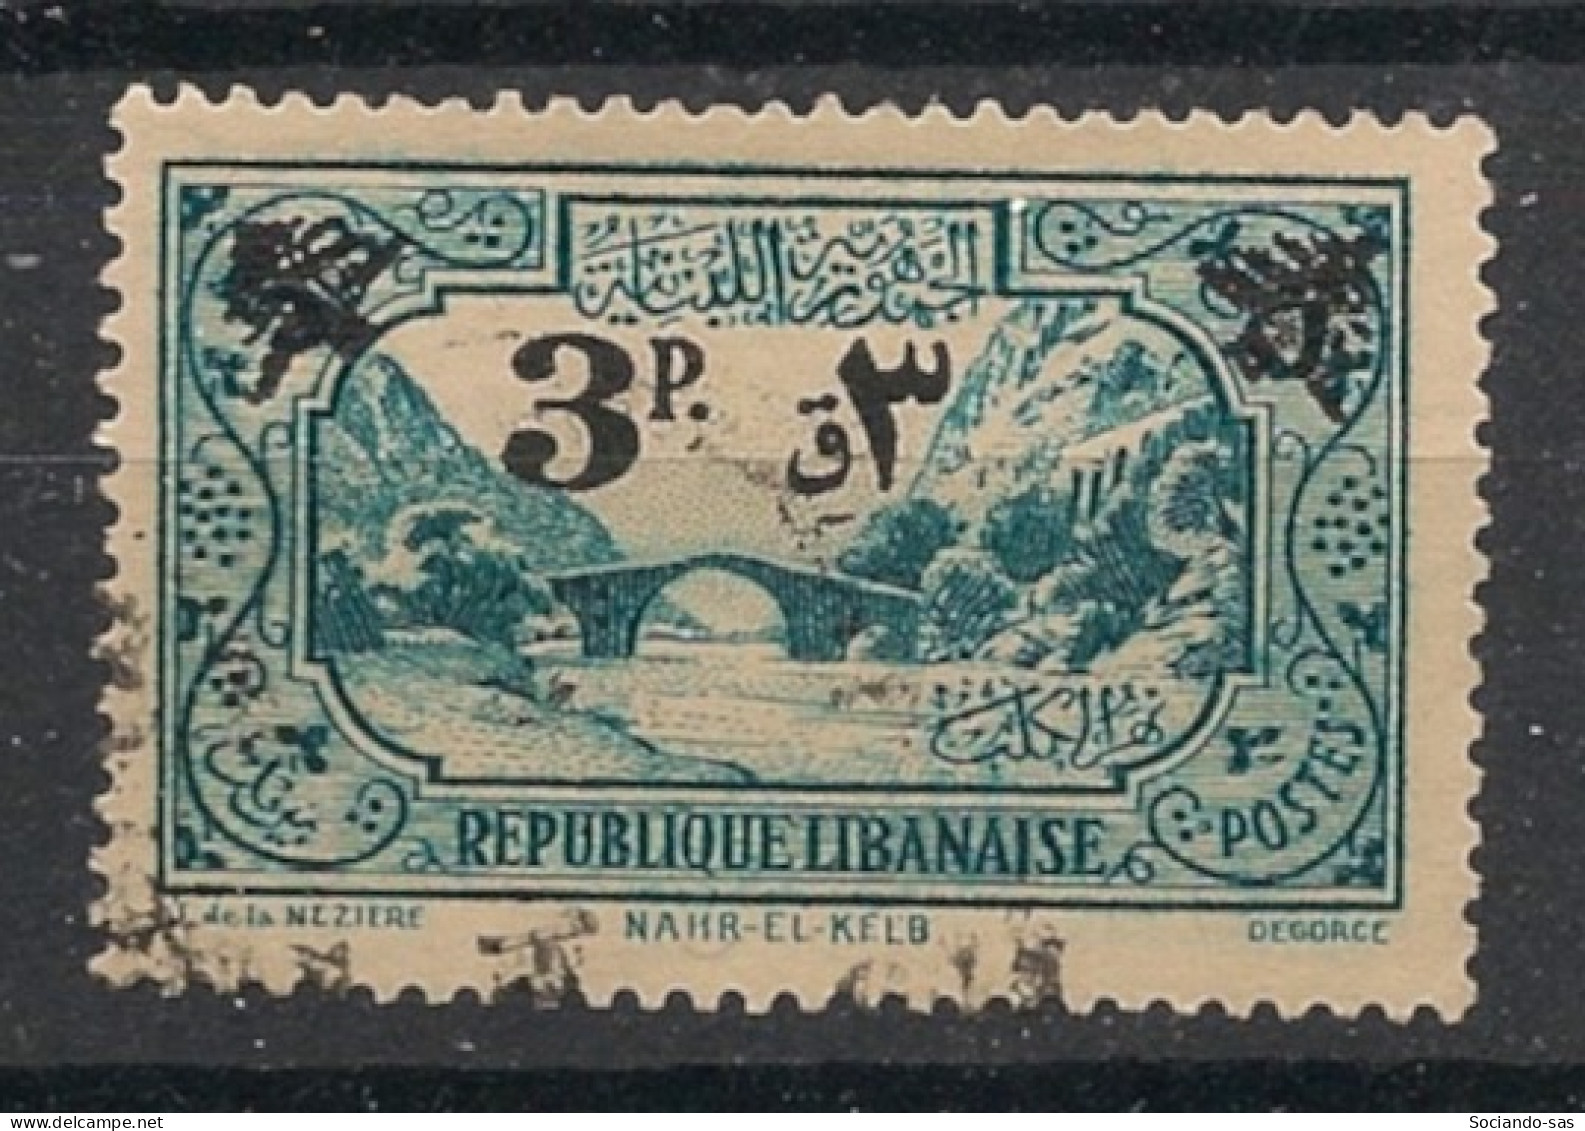 GRAND LIBAN - 1943-45 - N°YT. 182 - 3pi Sur 5pi Vert-bleu - Oblitéré / Used - Gebraucht